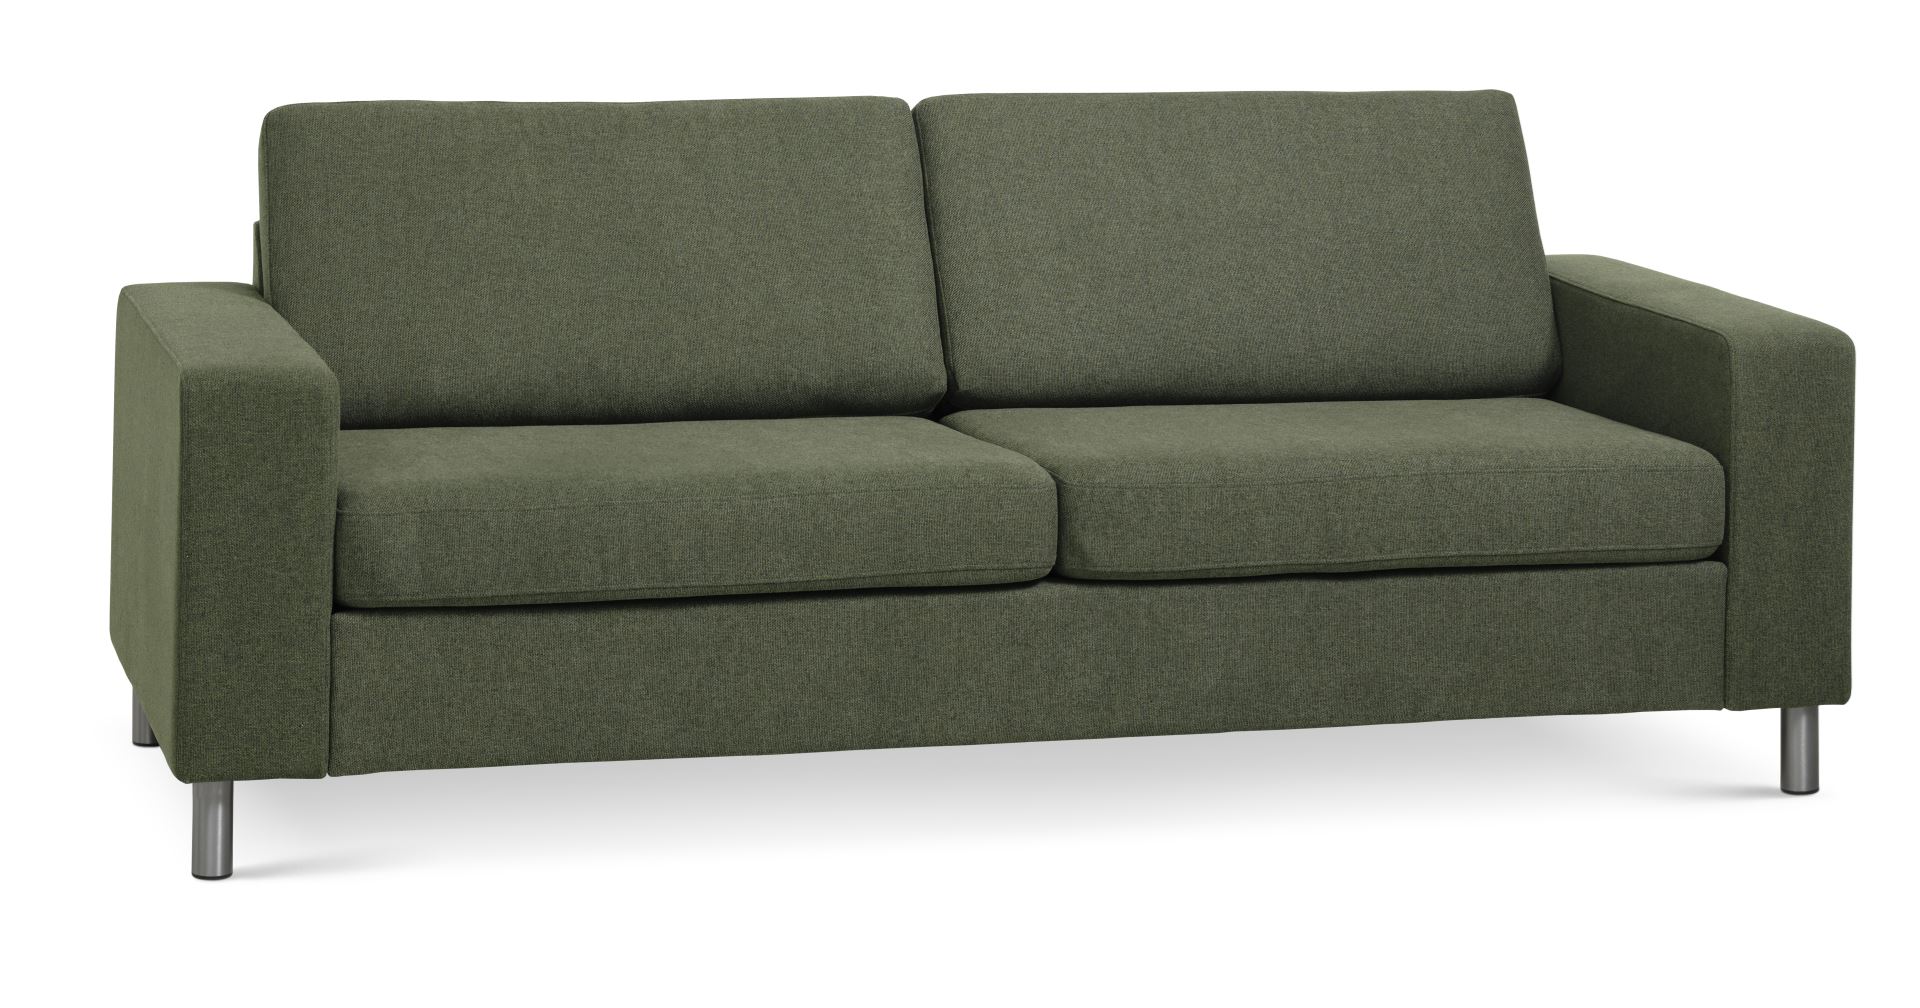 Pan 2,5 pers. sofa - vinter mosgrøn polyester stof og børstet aluminium